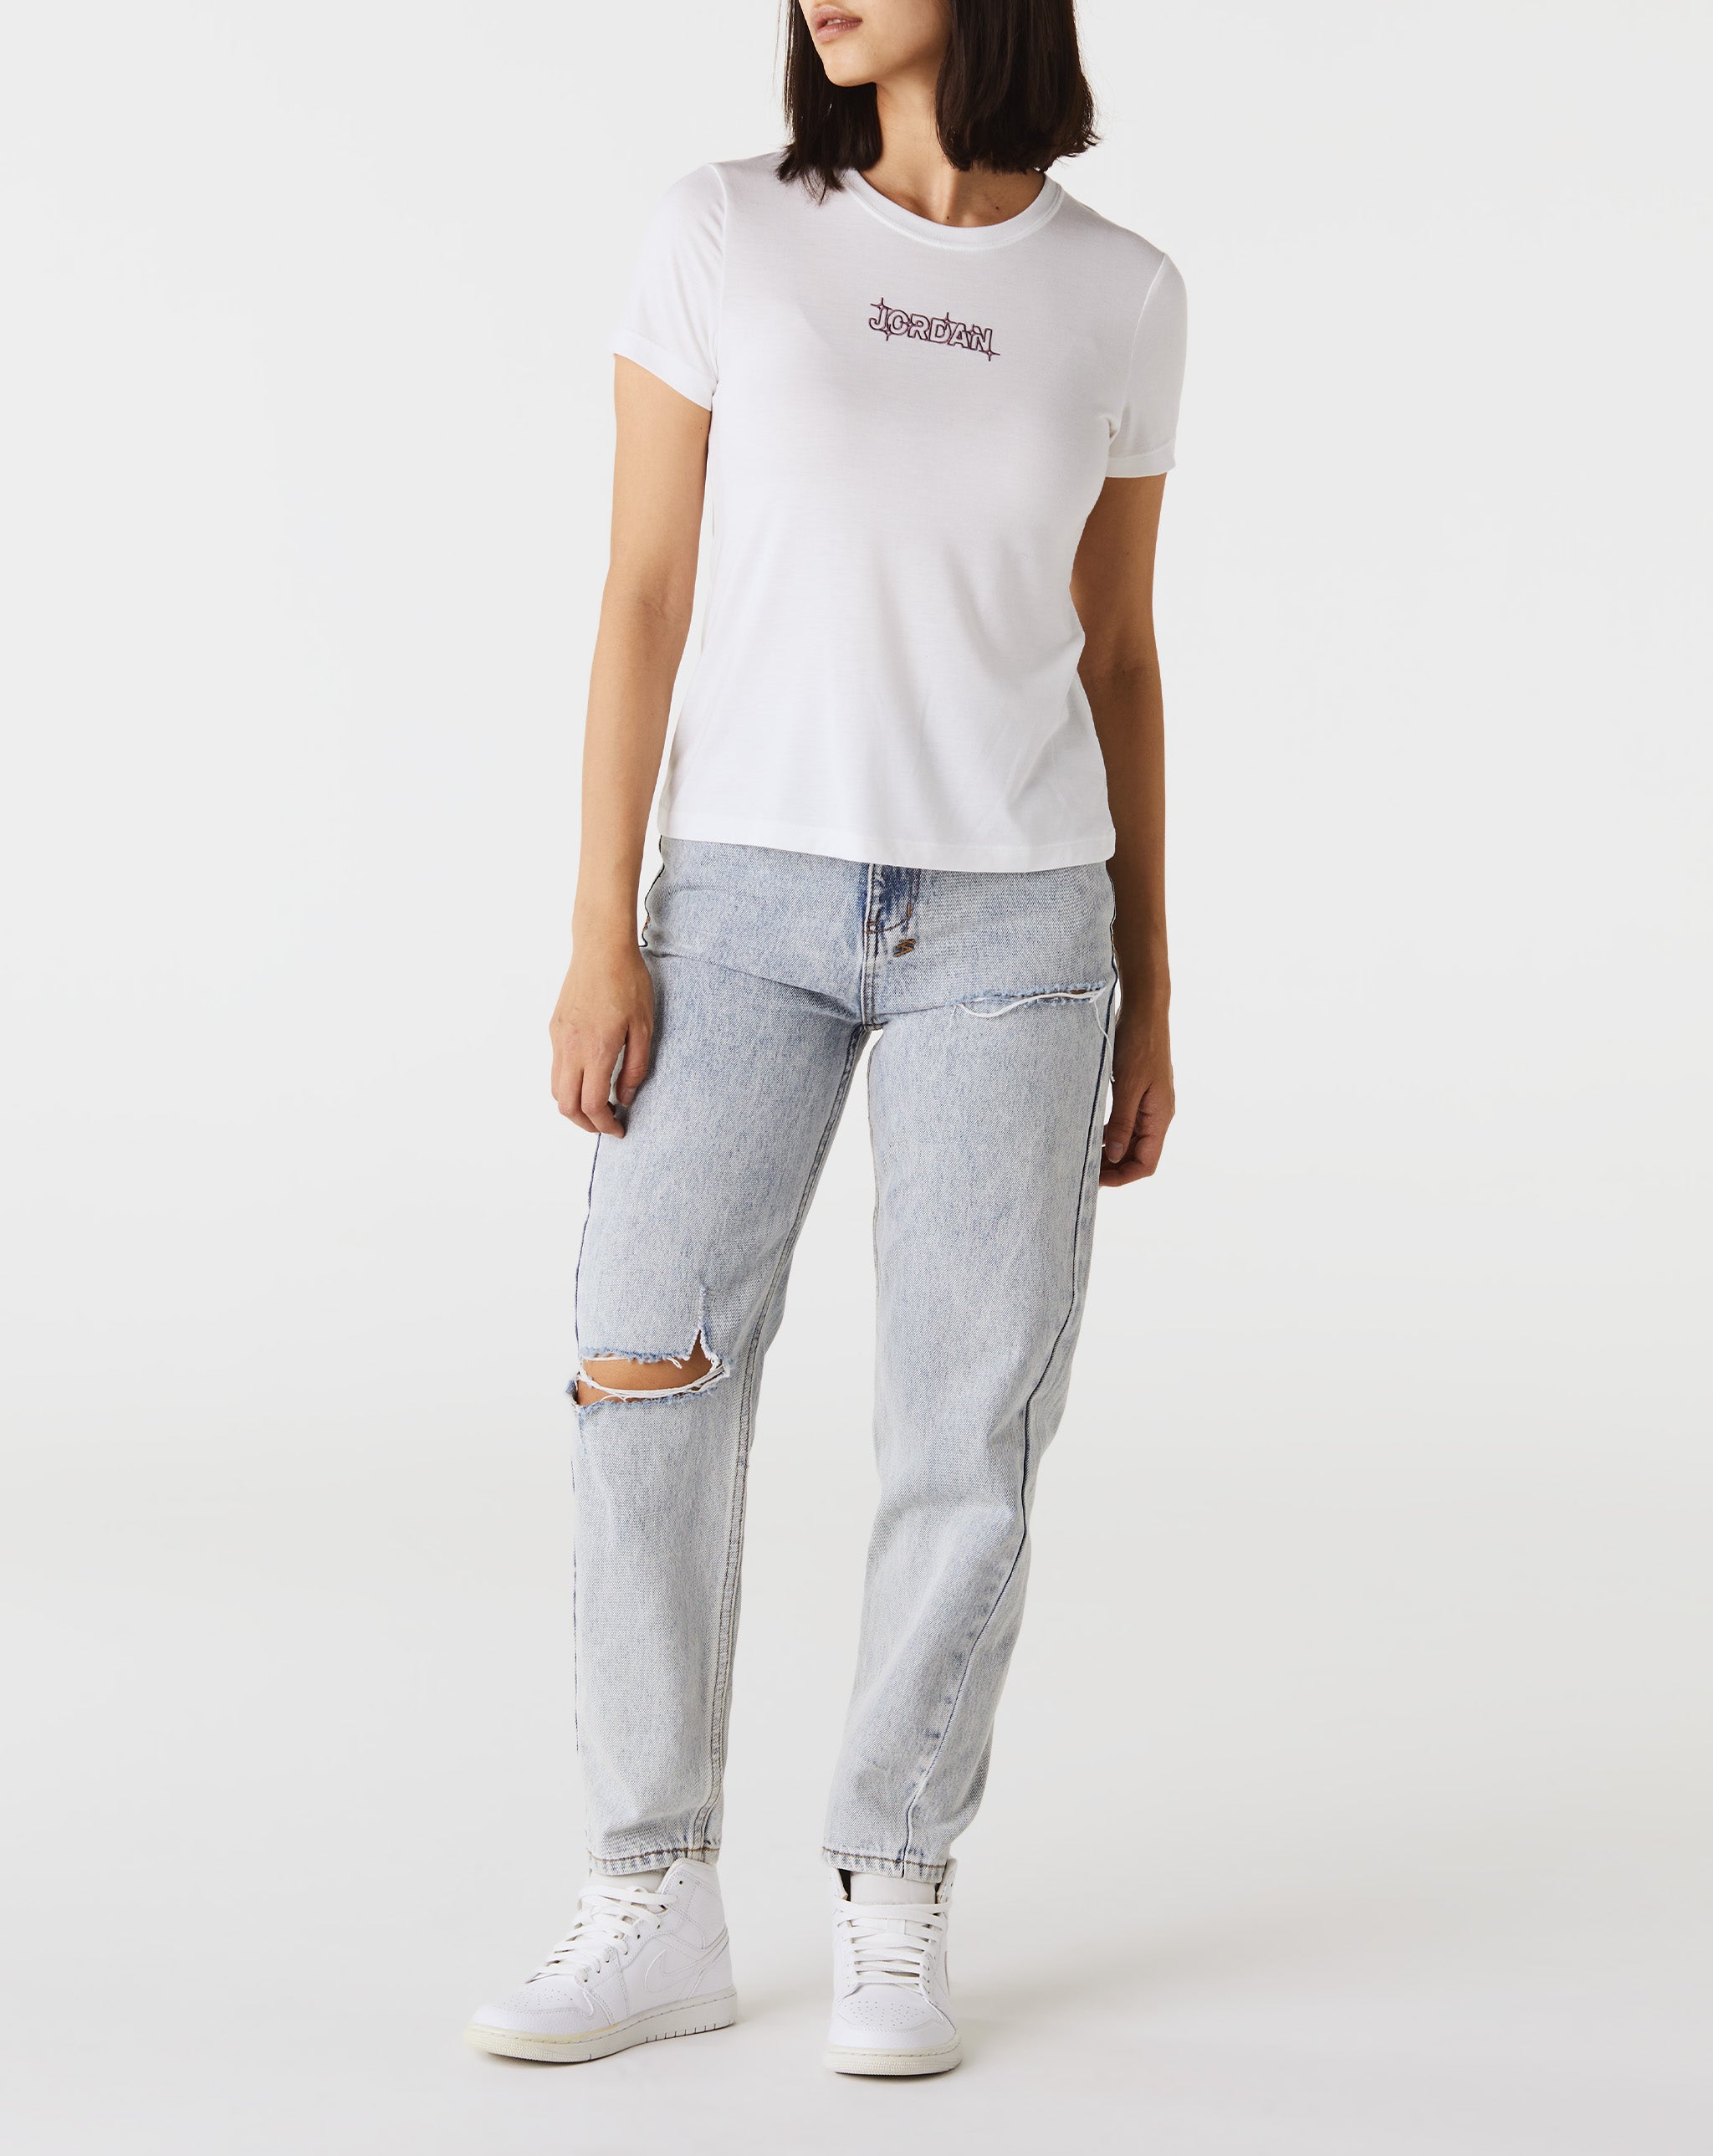 Air Jordan Women's Slim Graphic T-Shirt  - XHIBITION